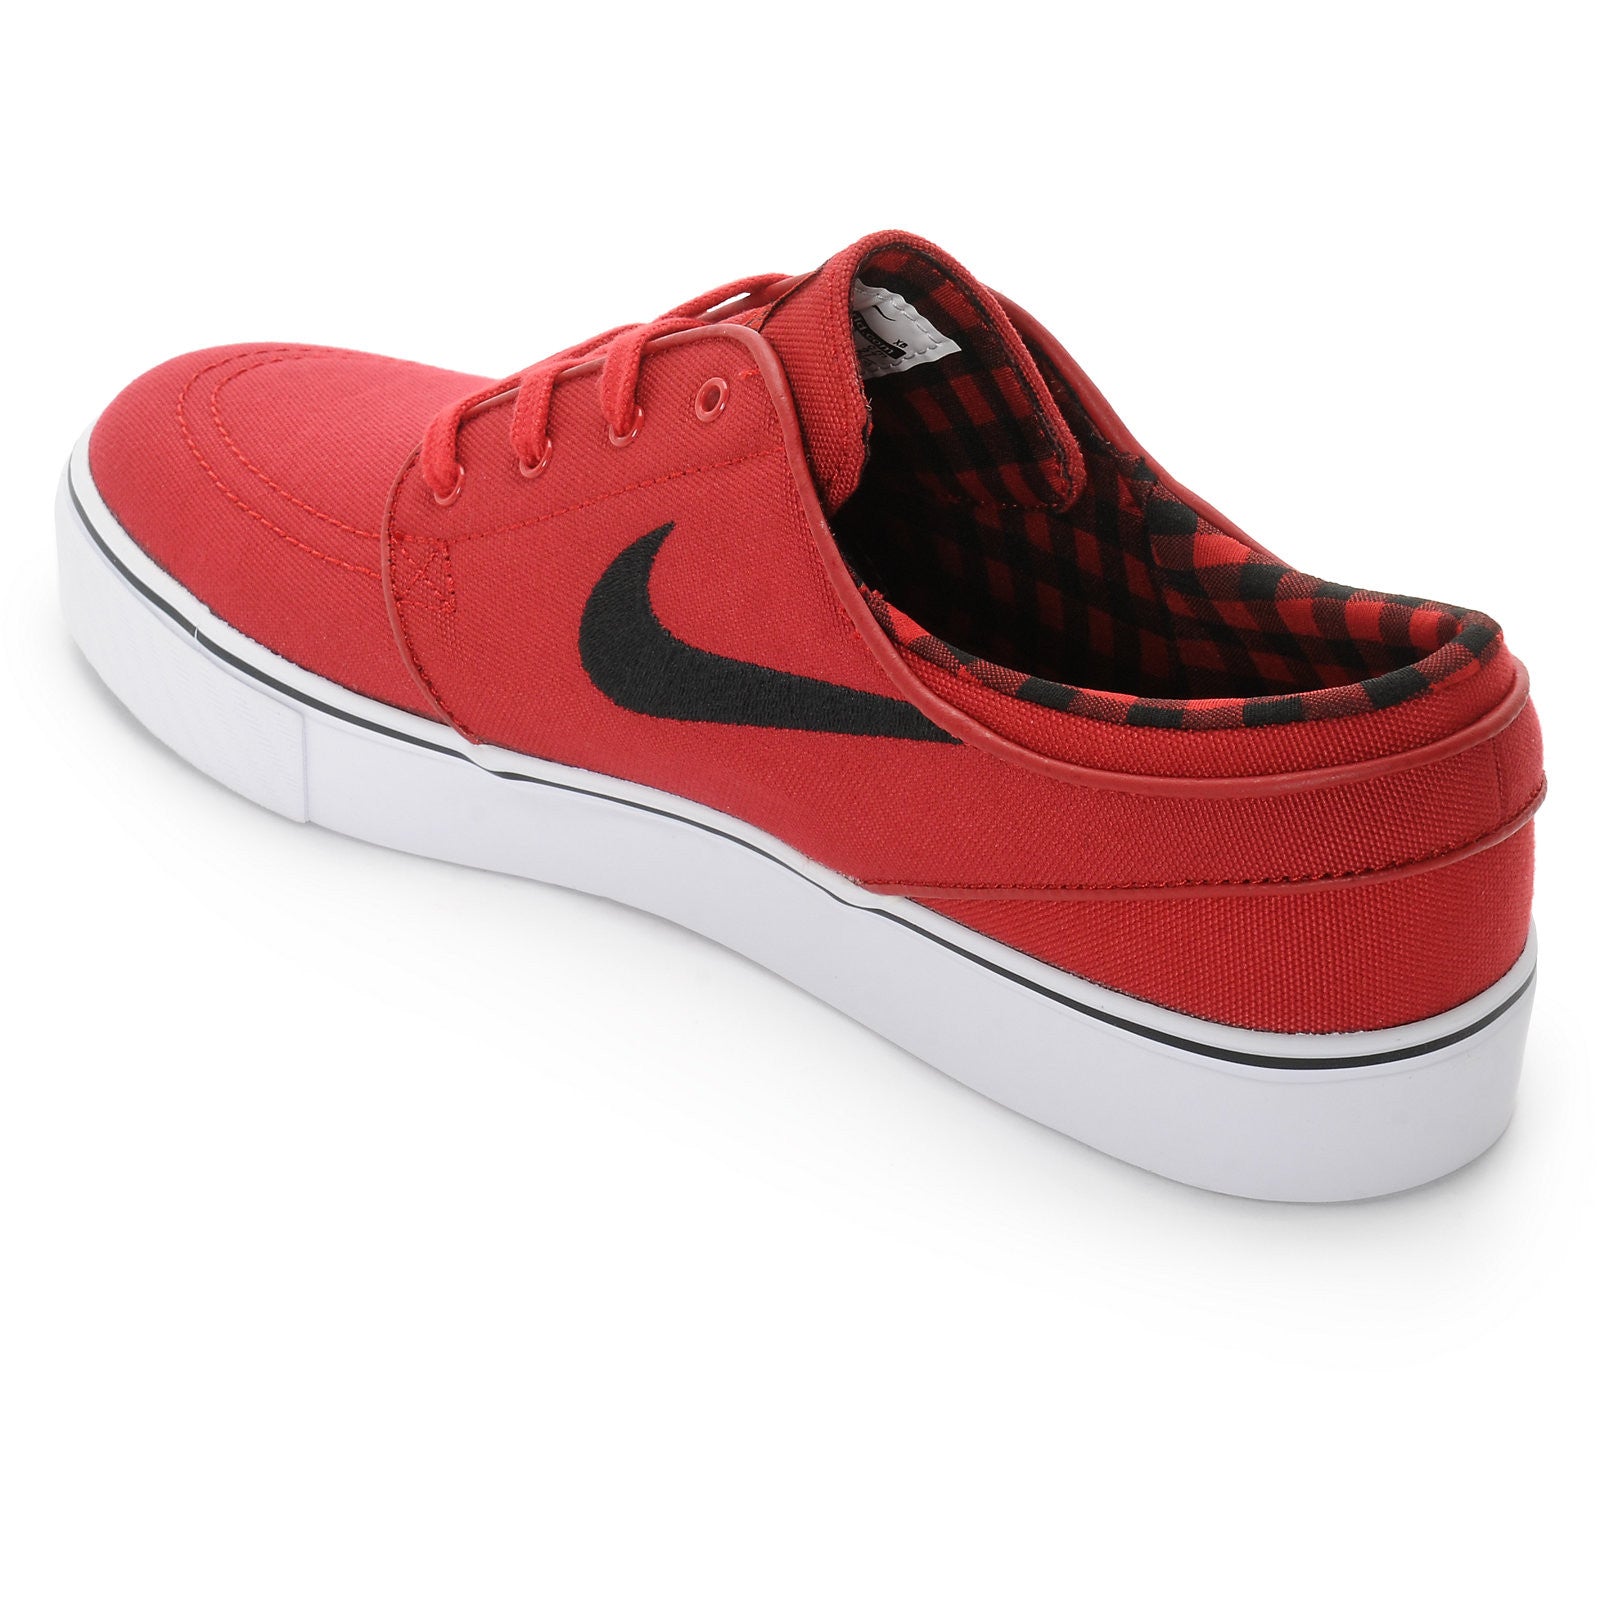 Nike SB Canvas - Red/Black/White - New Star